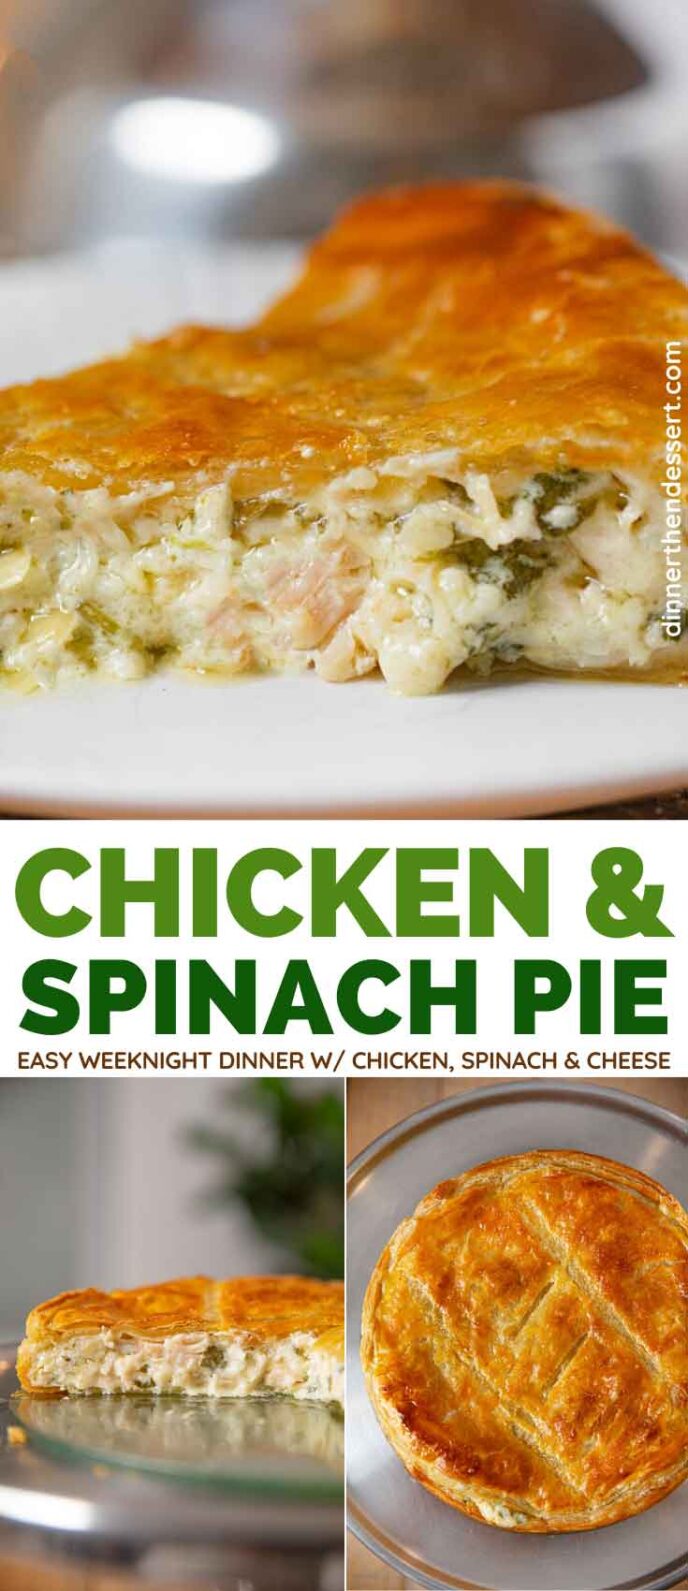 Chicken and Spinach Pie collage